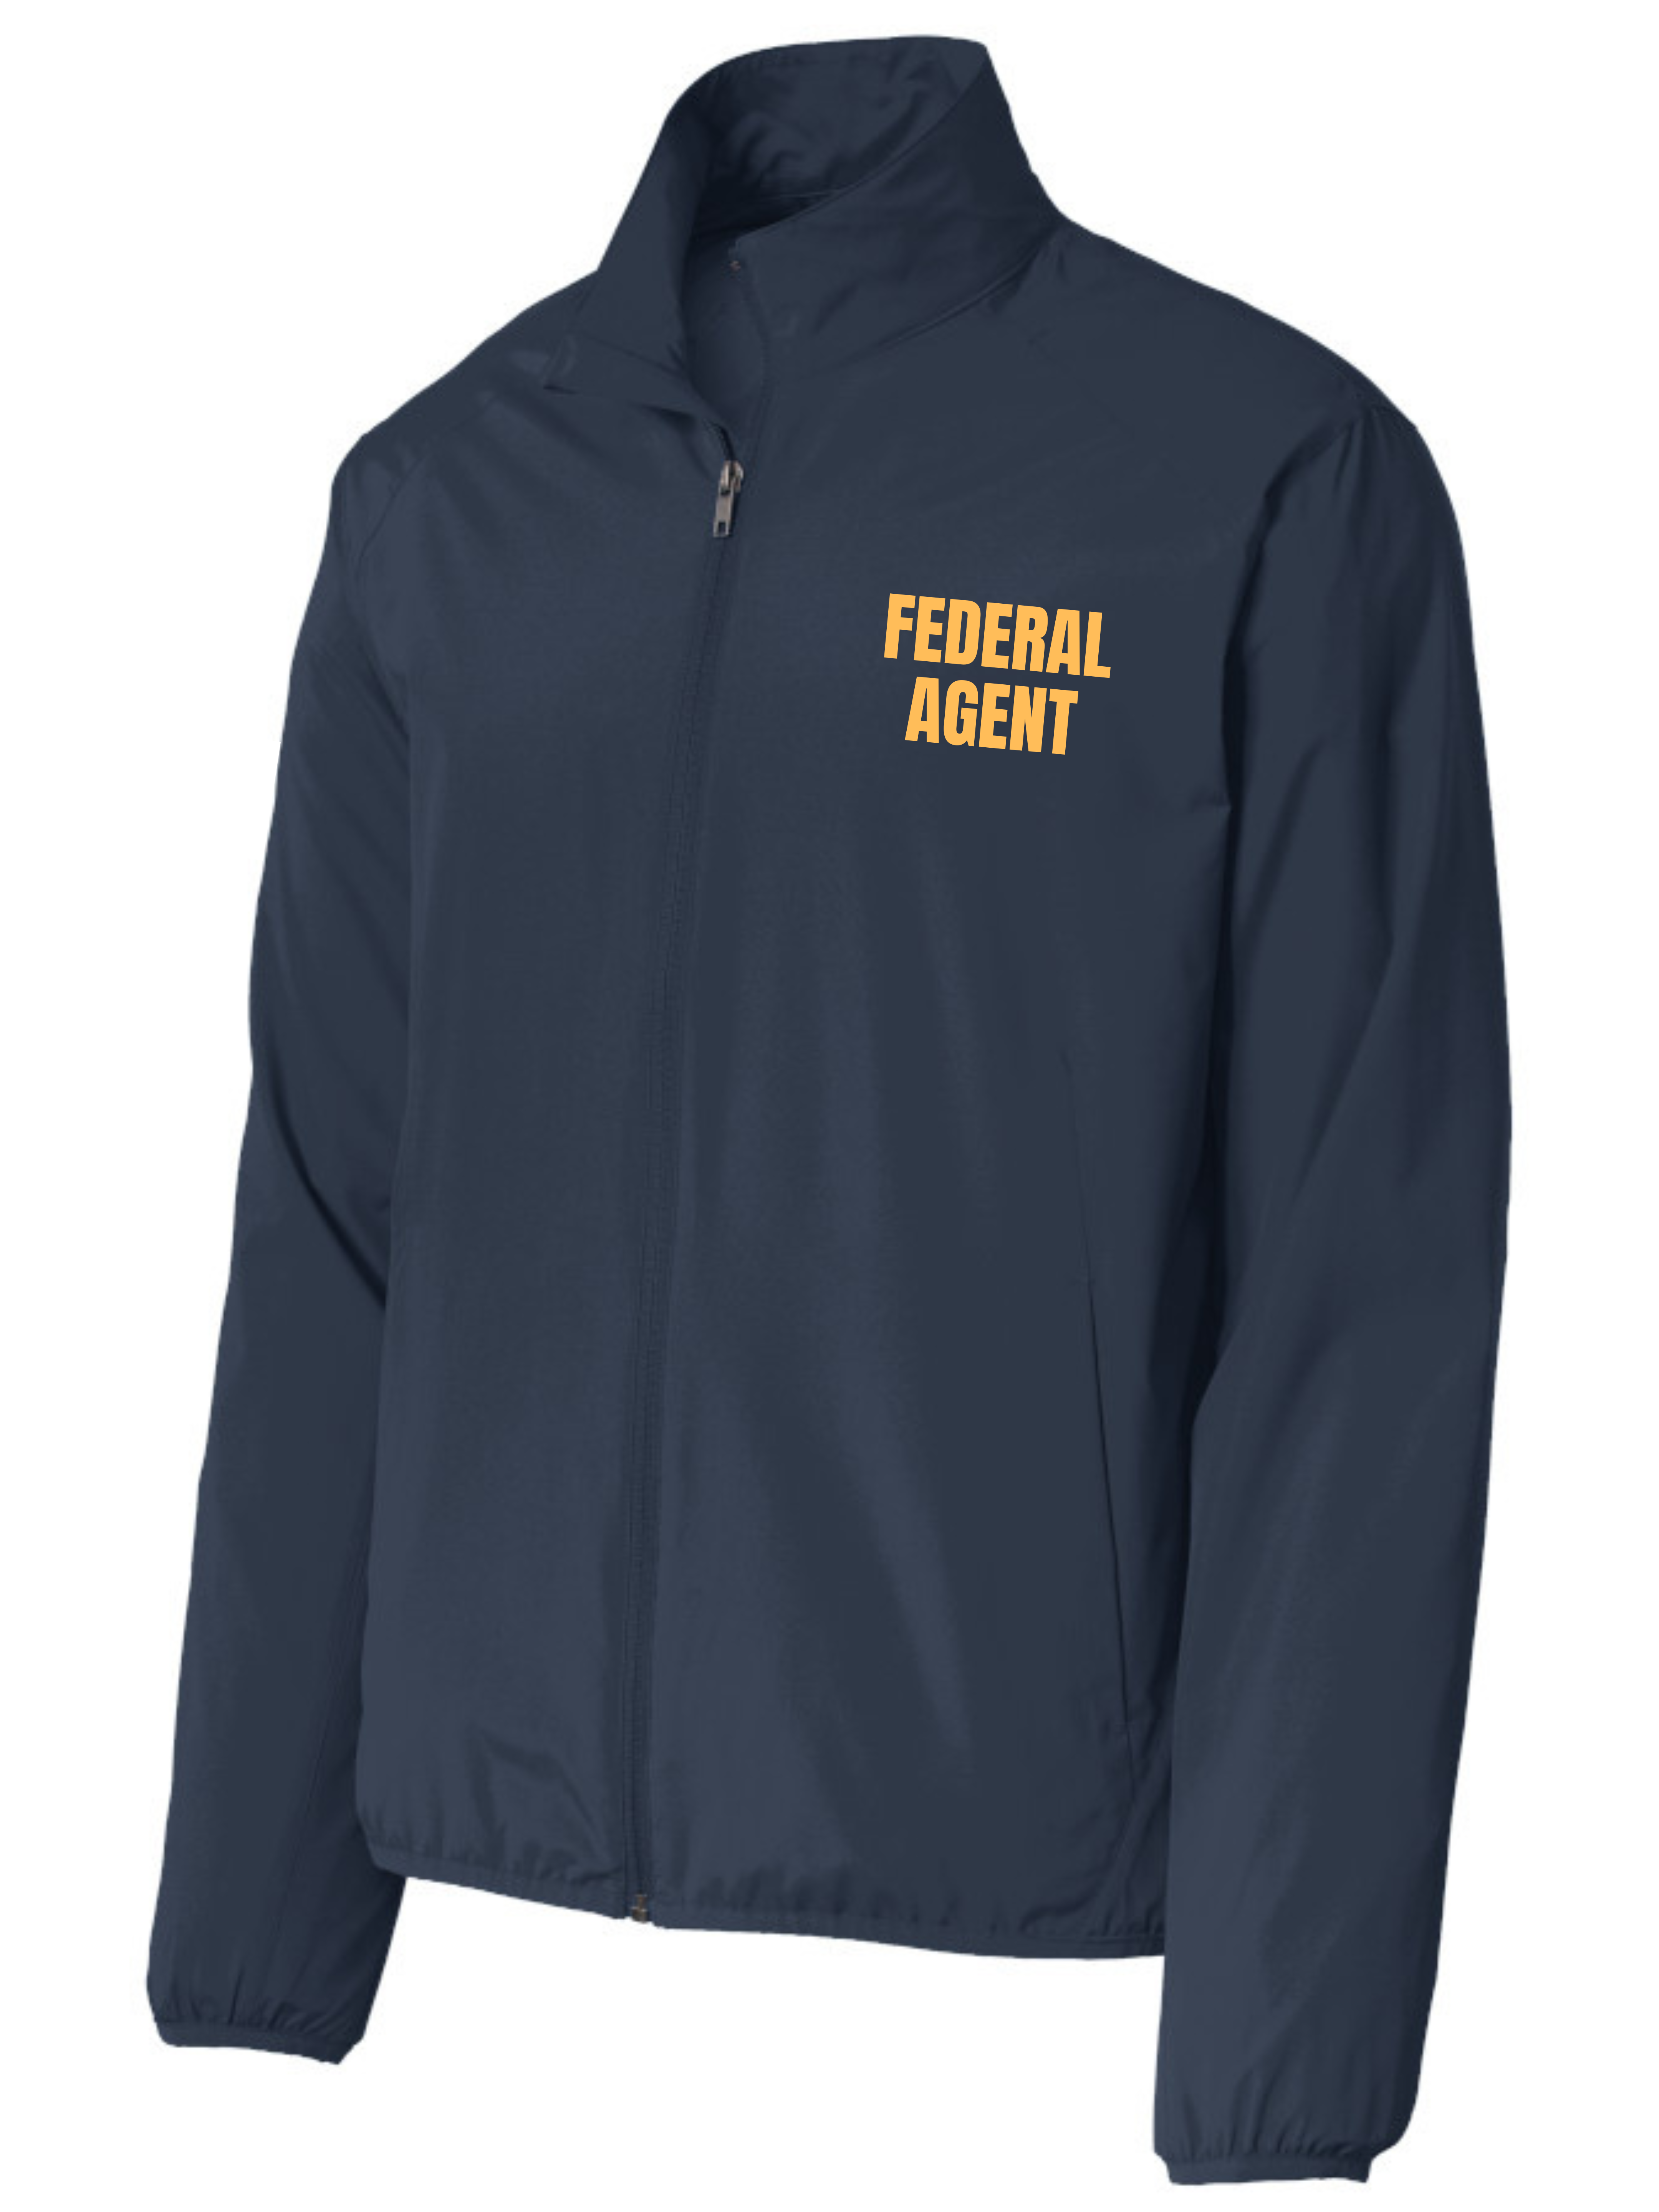 Federal Agent Identifier Jacket